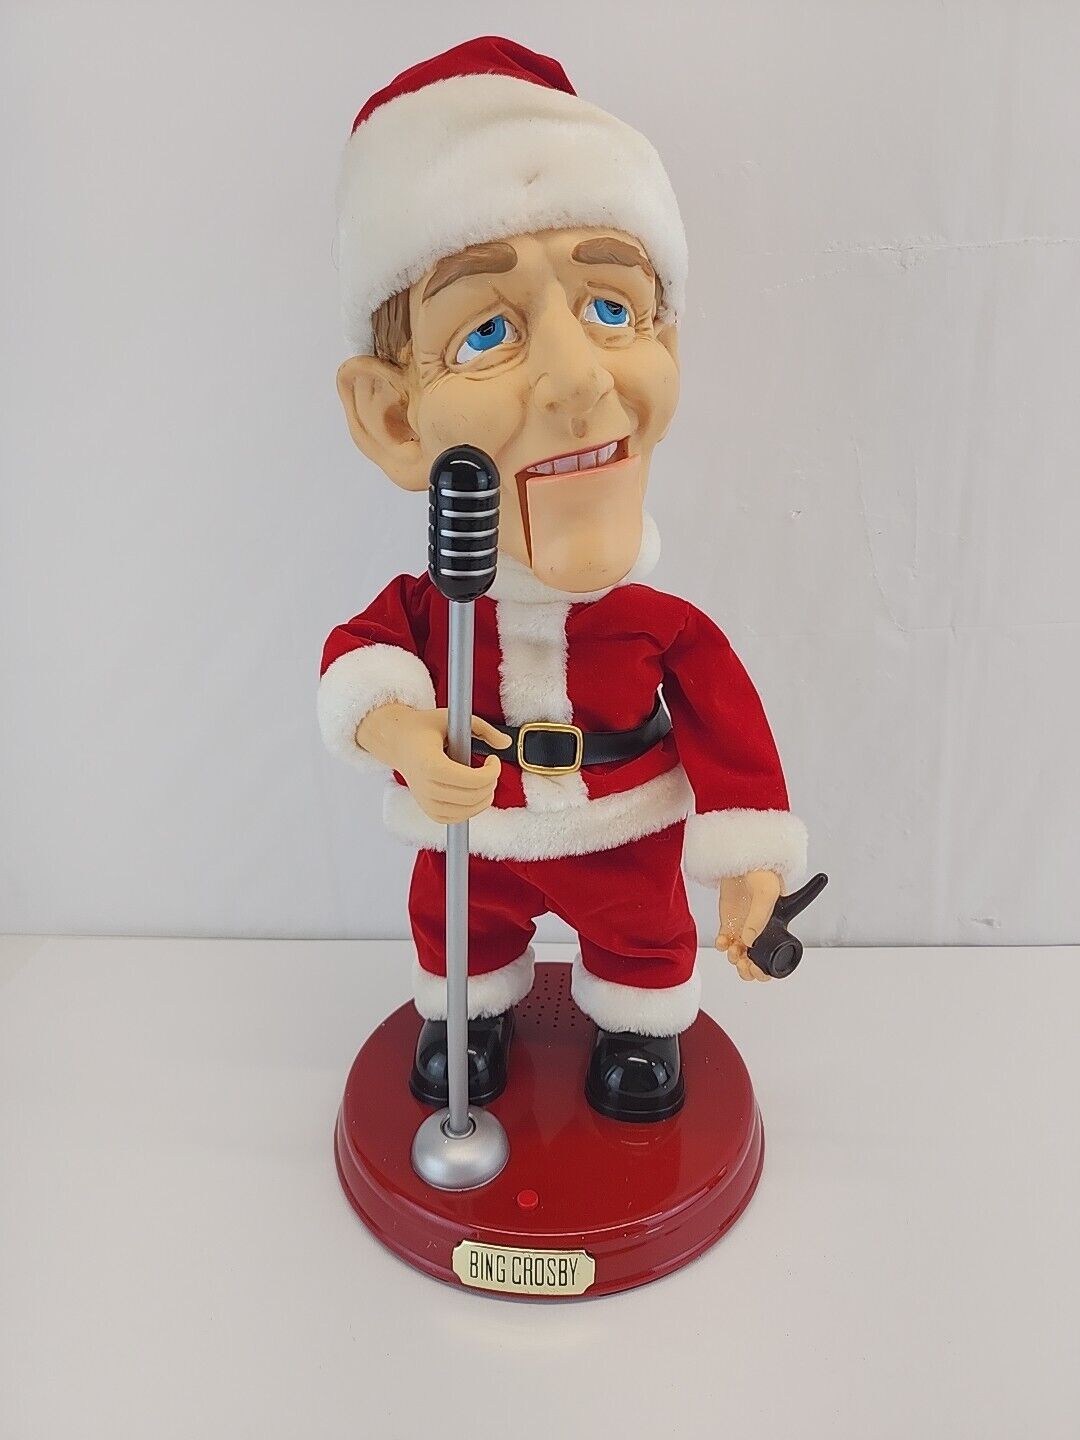 Vintage Gemmy Bing Crosby Animated Singing Figure 2001 18